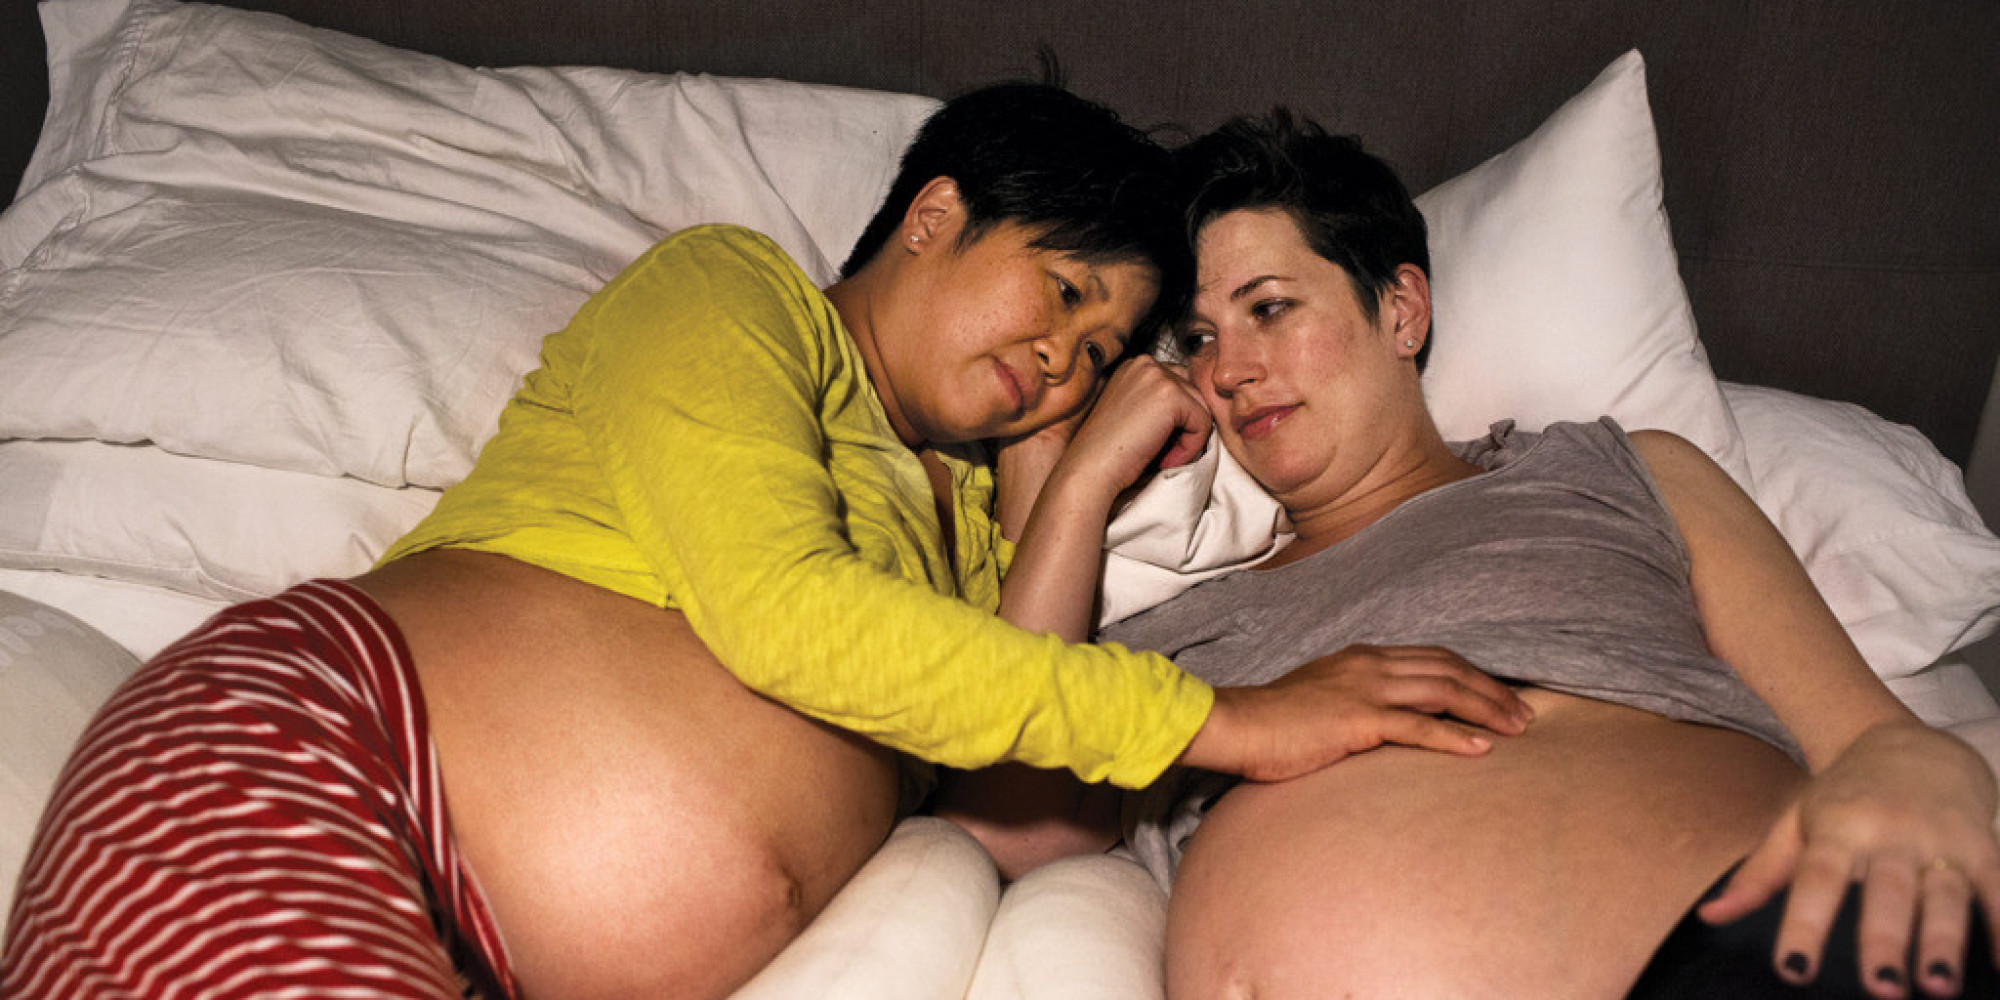 Pregnant Lesbians 110